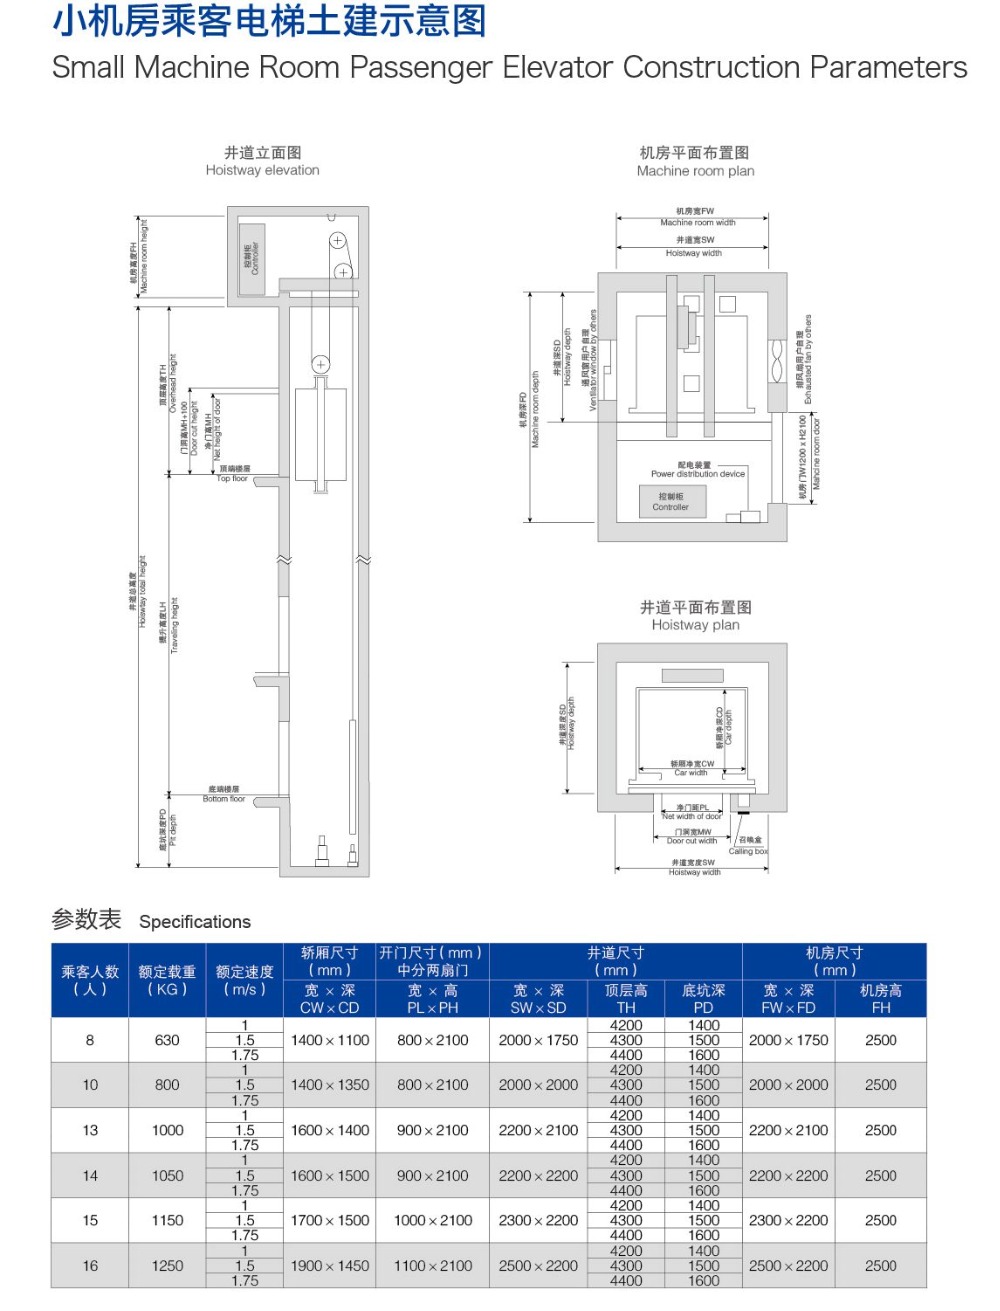 Indoor Hot Sale Hyundai Passenger Elevator With CE Certificates